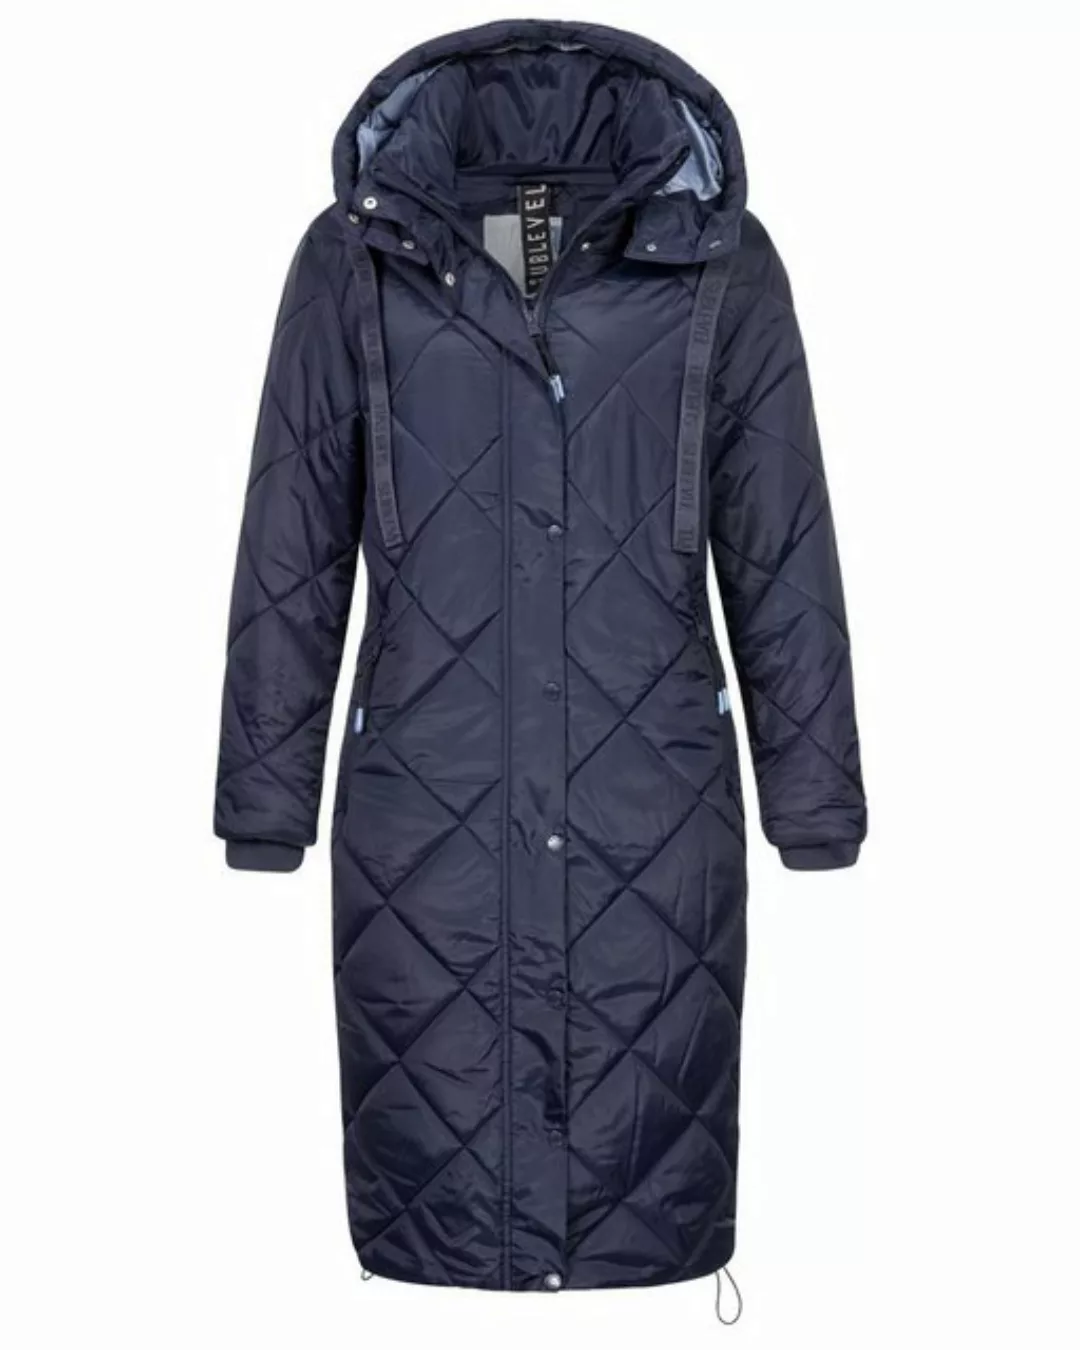 SUBLEVEL Steppjacke Damen Winter Jacke Mantel Parka Steppjacke Lange Mantel günstig online kaufen